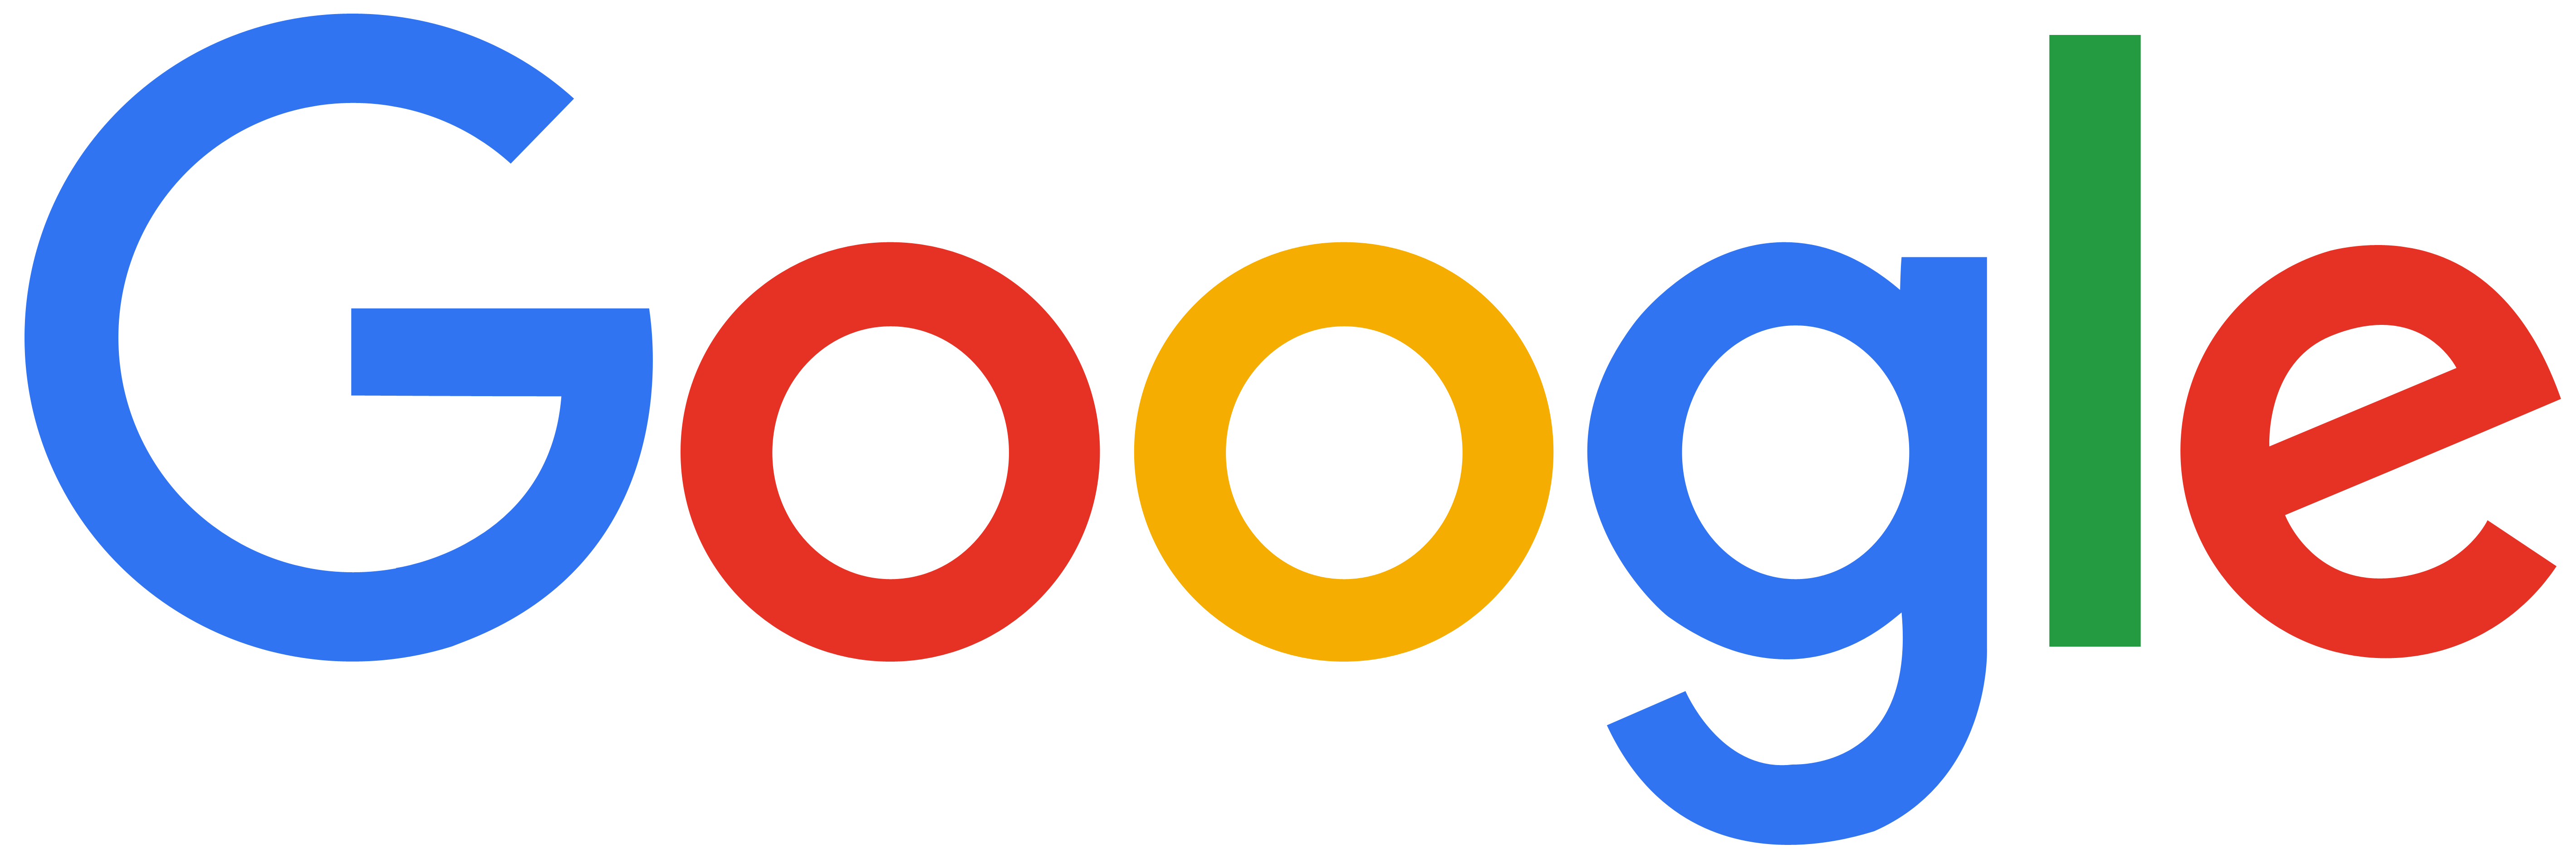 googleLogo